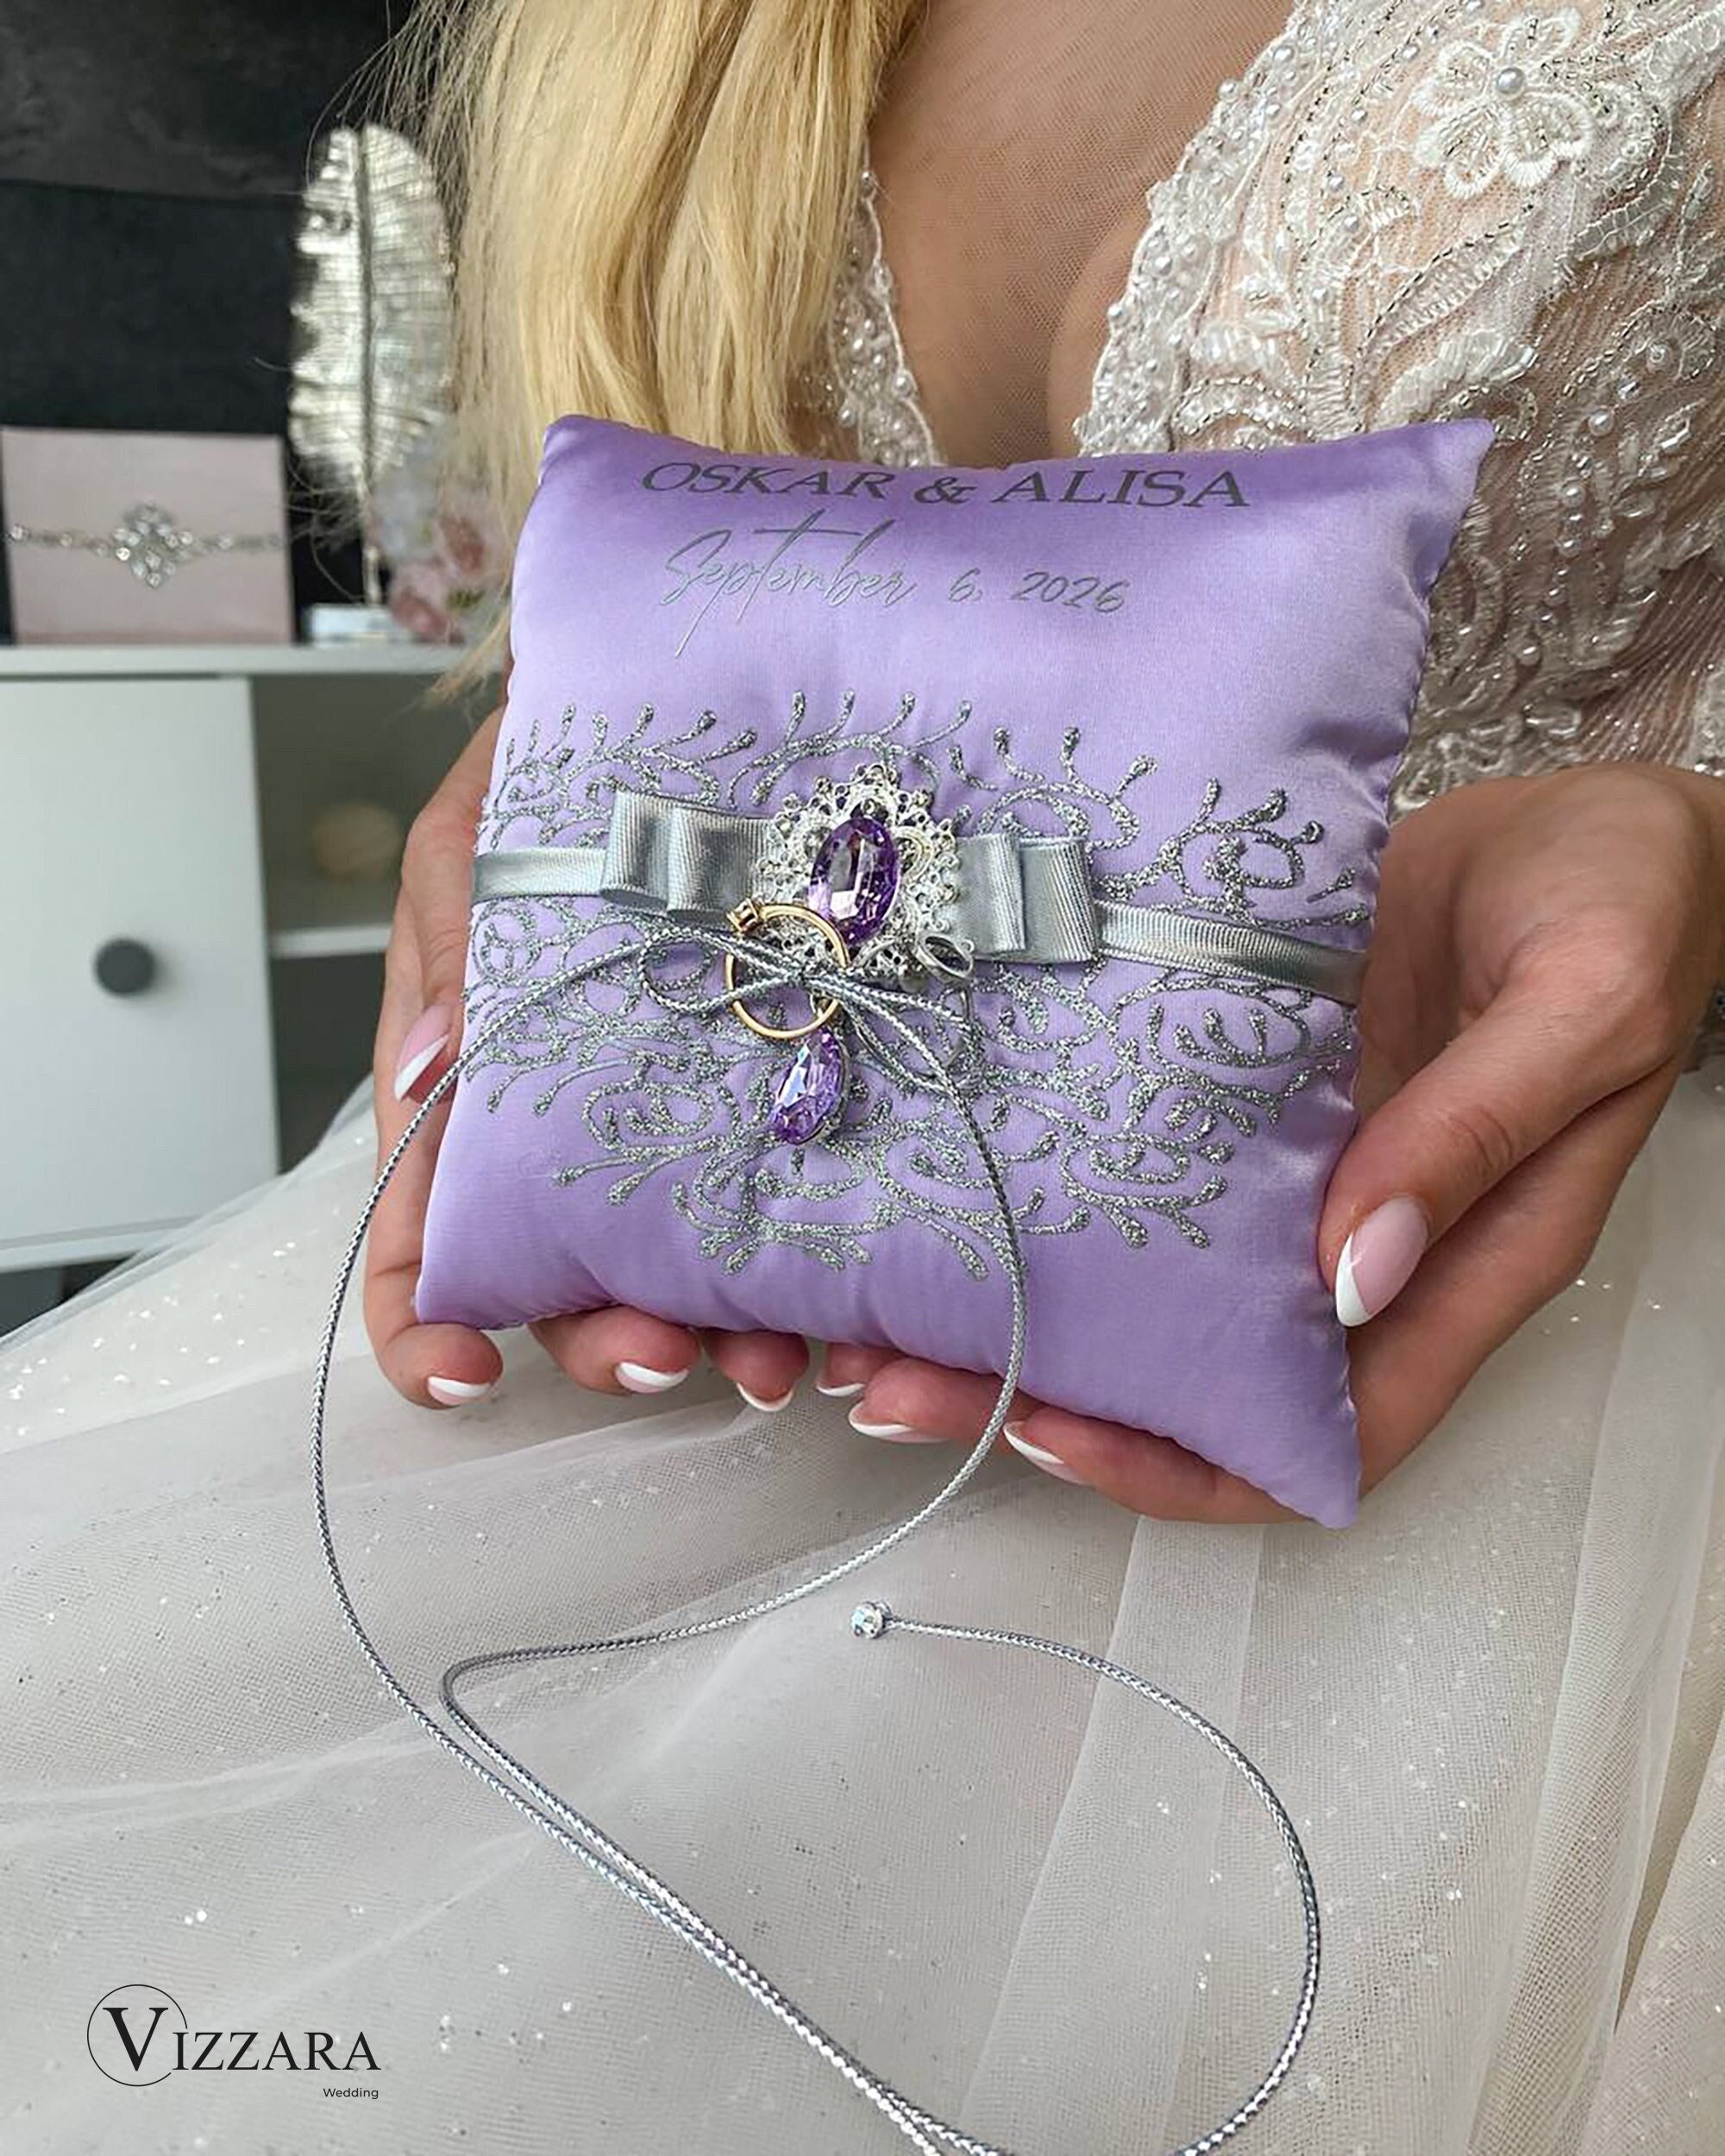 No sew wedding ring pillow: Easy DIY wedding accessories tutorial - YouTube